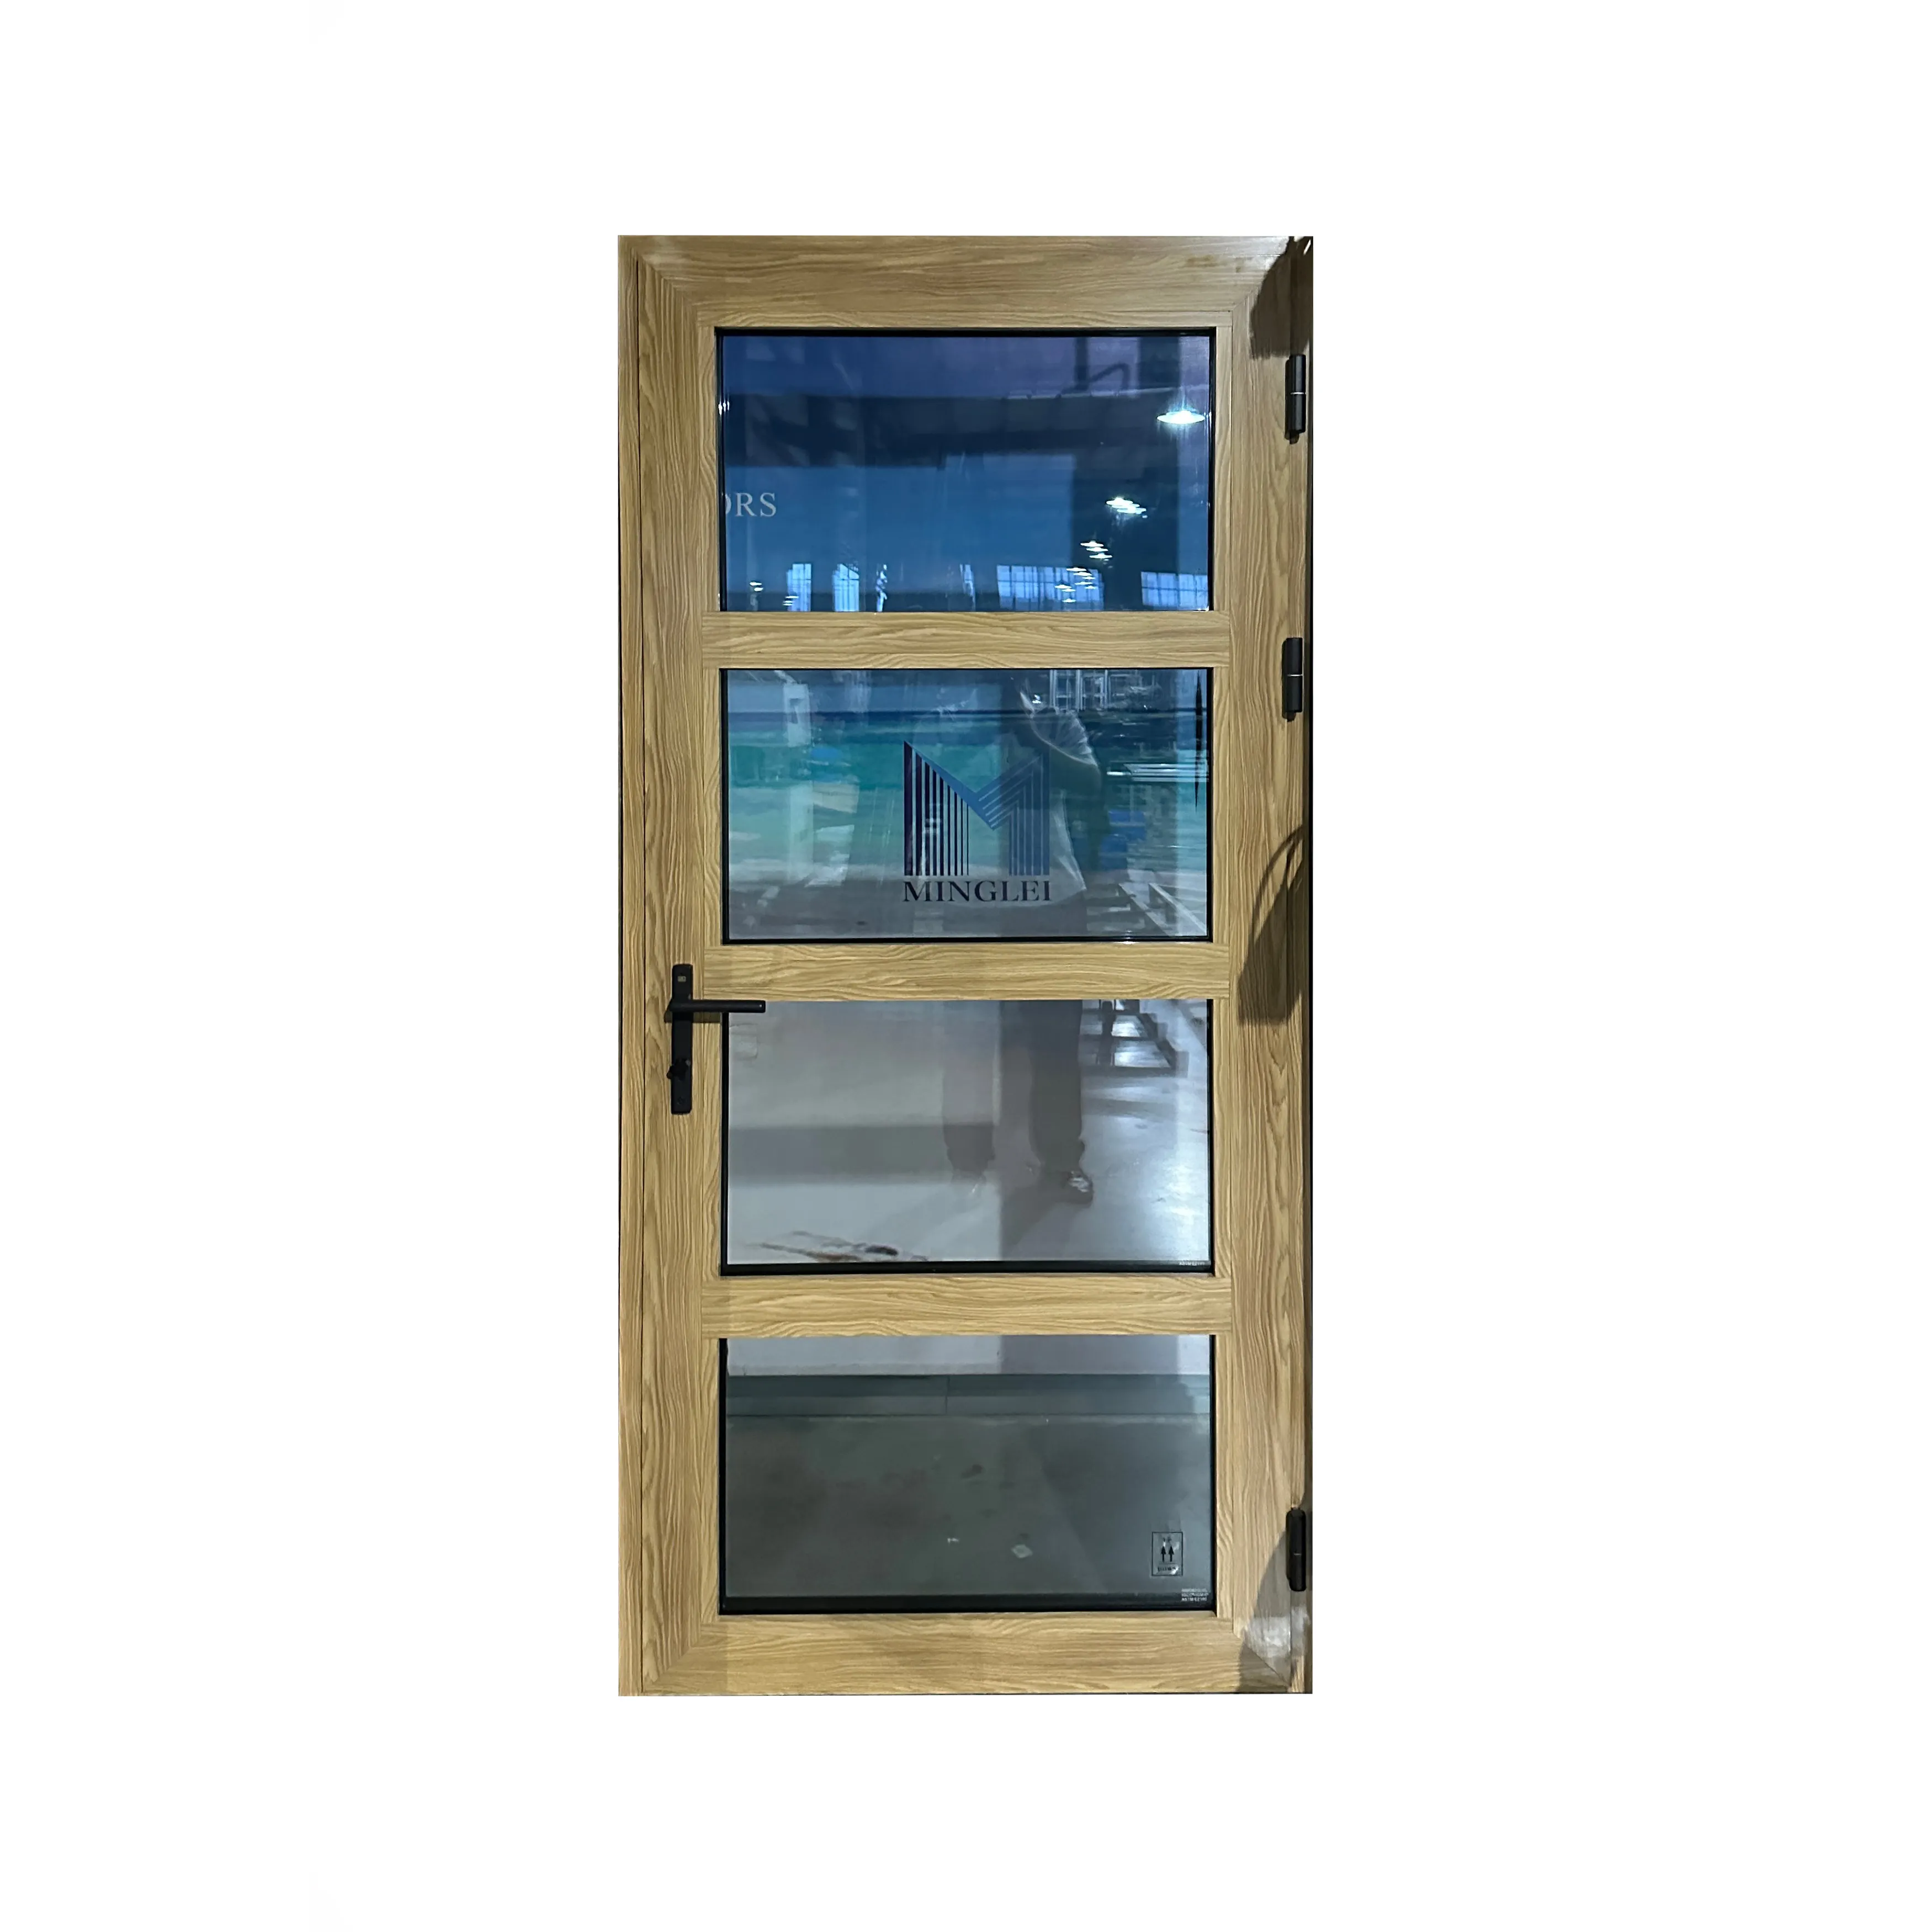 Minglei Customized Design Doors Thermal Break Aluminum Frame Glass Doors with Wood Grain Color